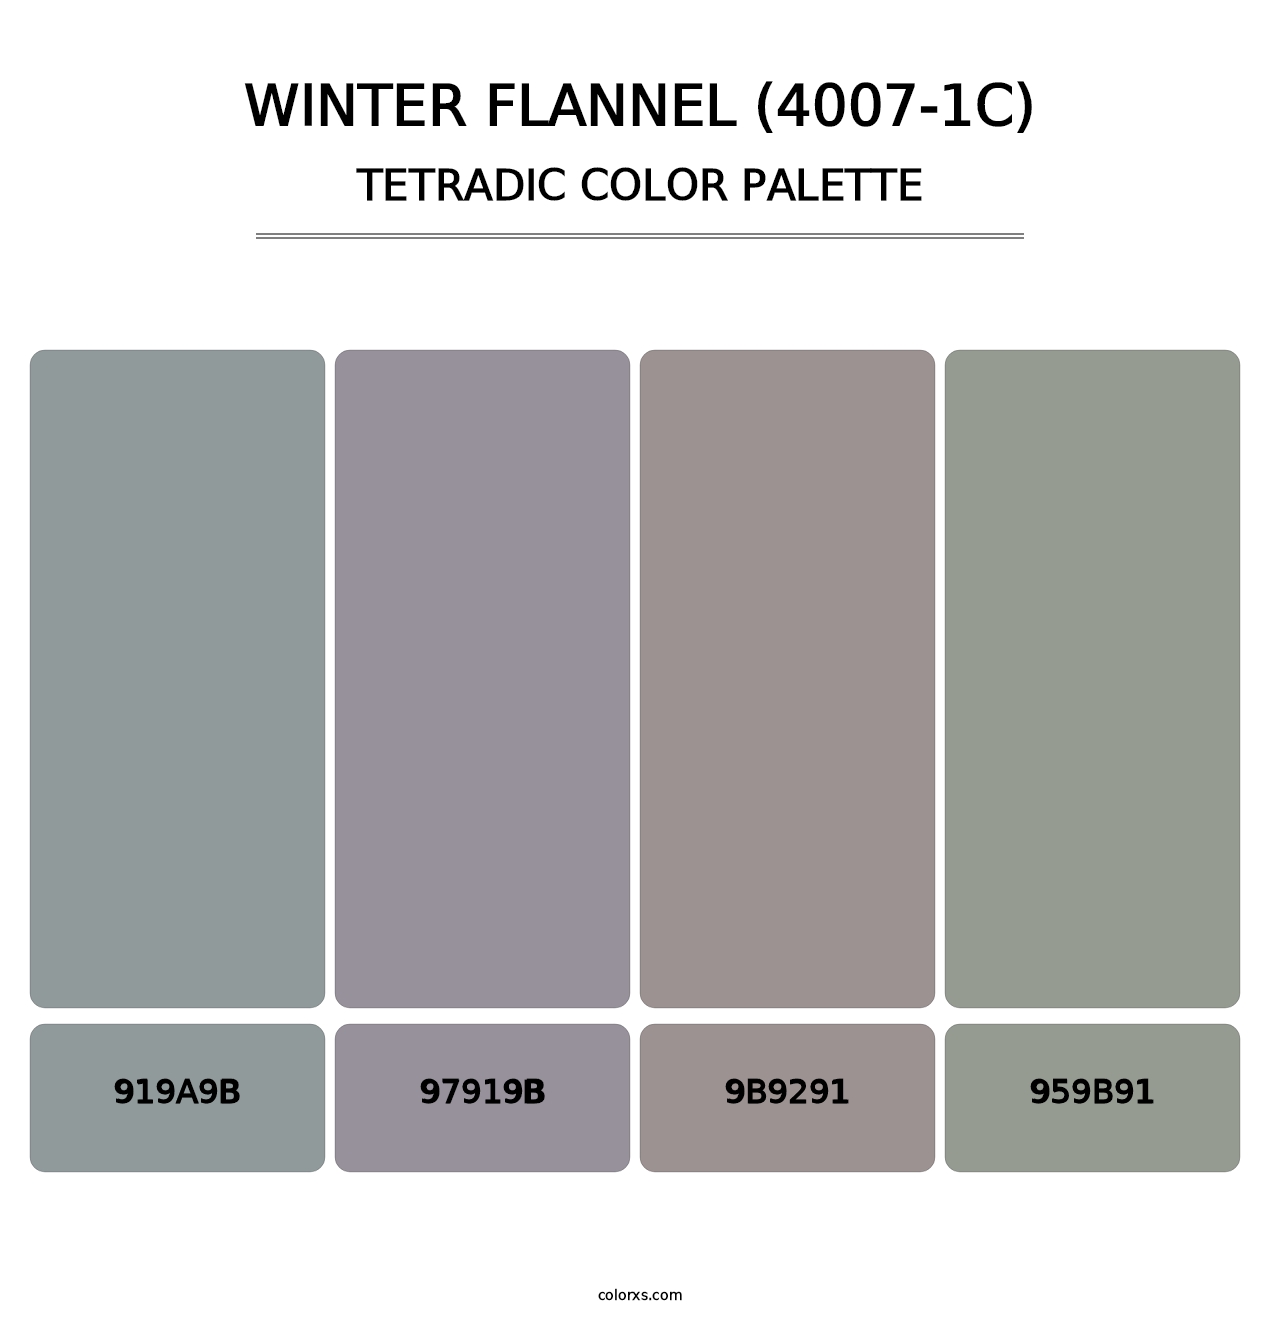 Winter Flannel (4007-1C) - Tetradic Color Palette